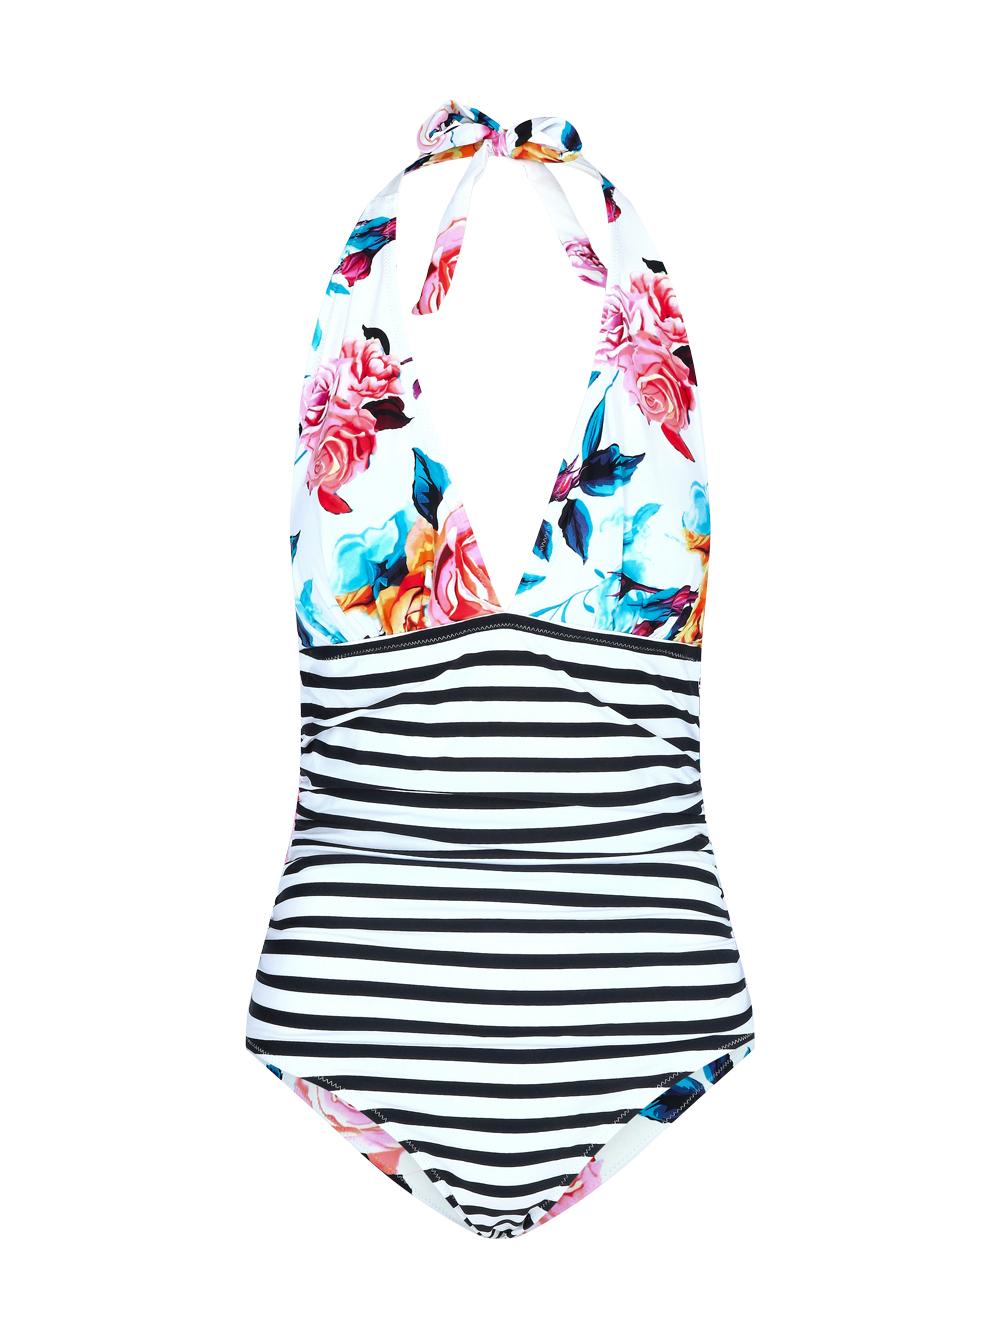 Selected image for CUPSHE J6 Ženski jednodelni kupaći kostim, L veličina, Crno-beli